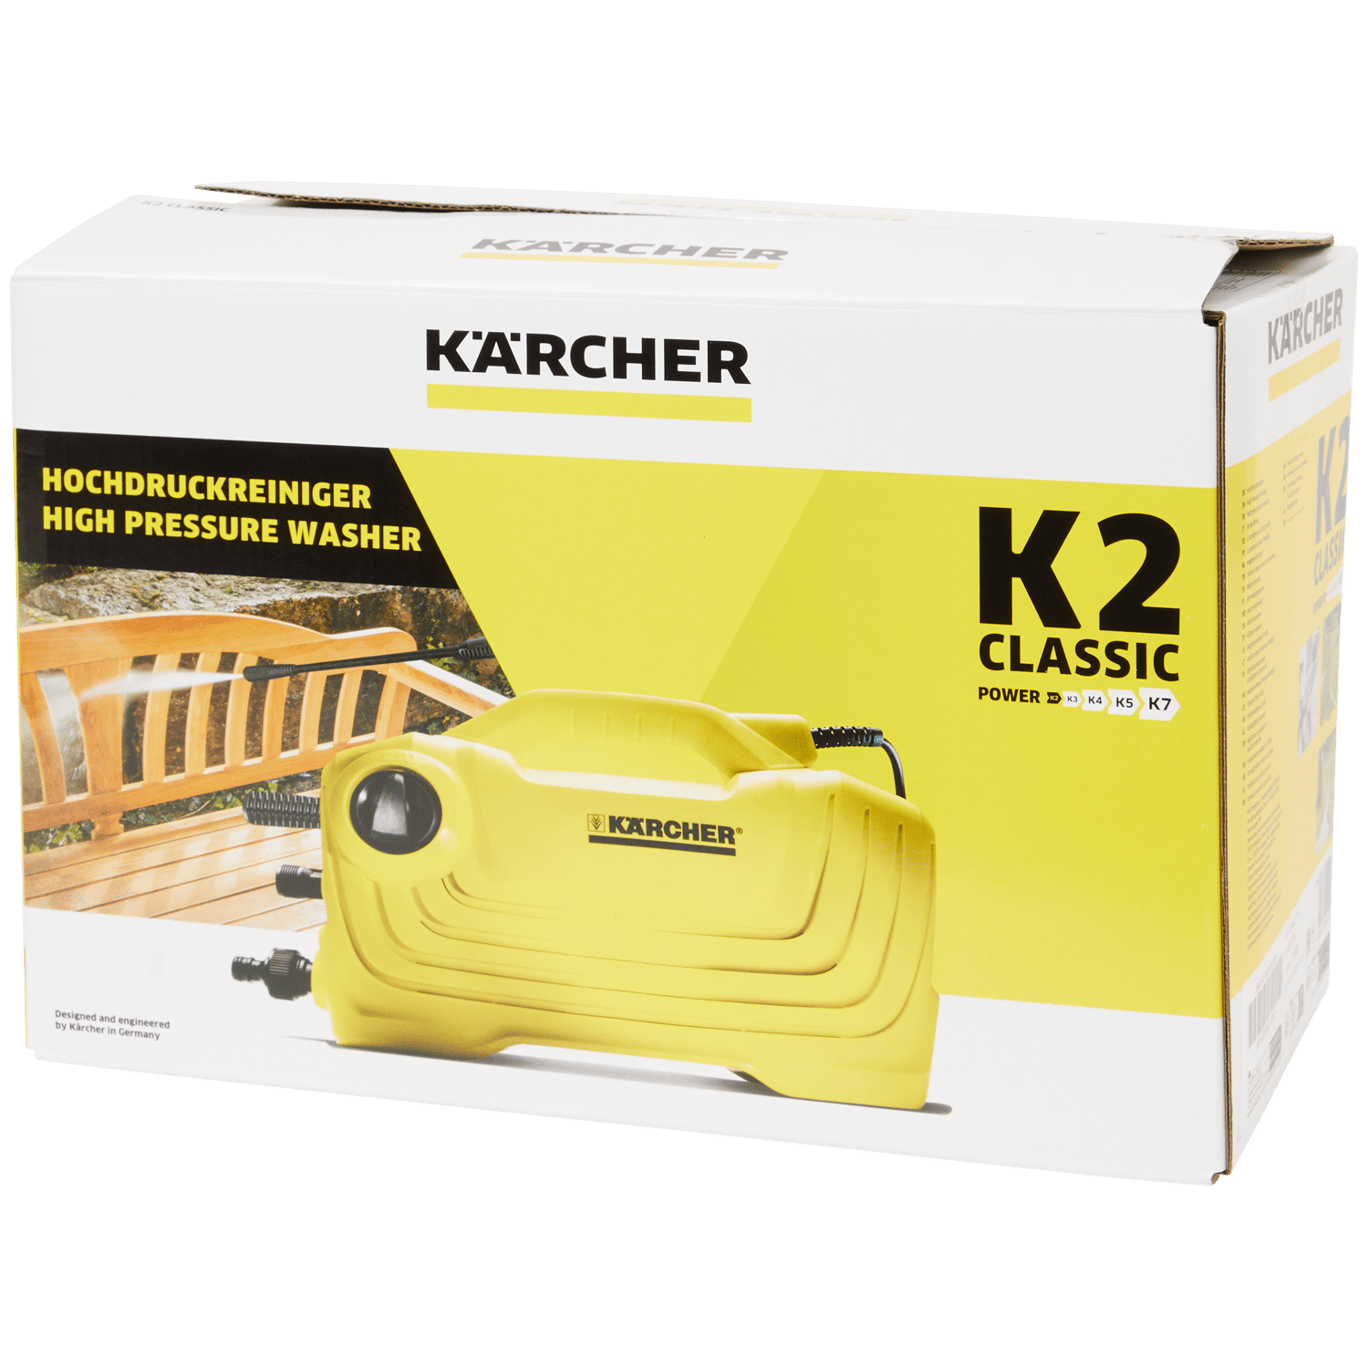 Menselijk ras eten lawaai Kärcher hogedrukreiniger K2 Classic | Action.com